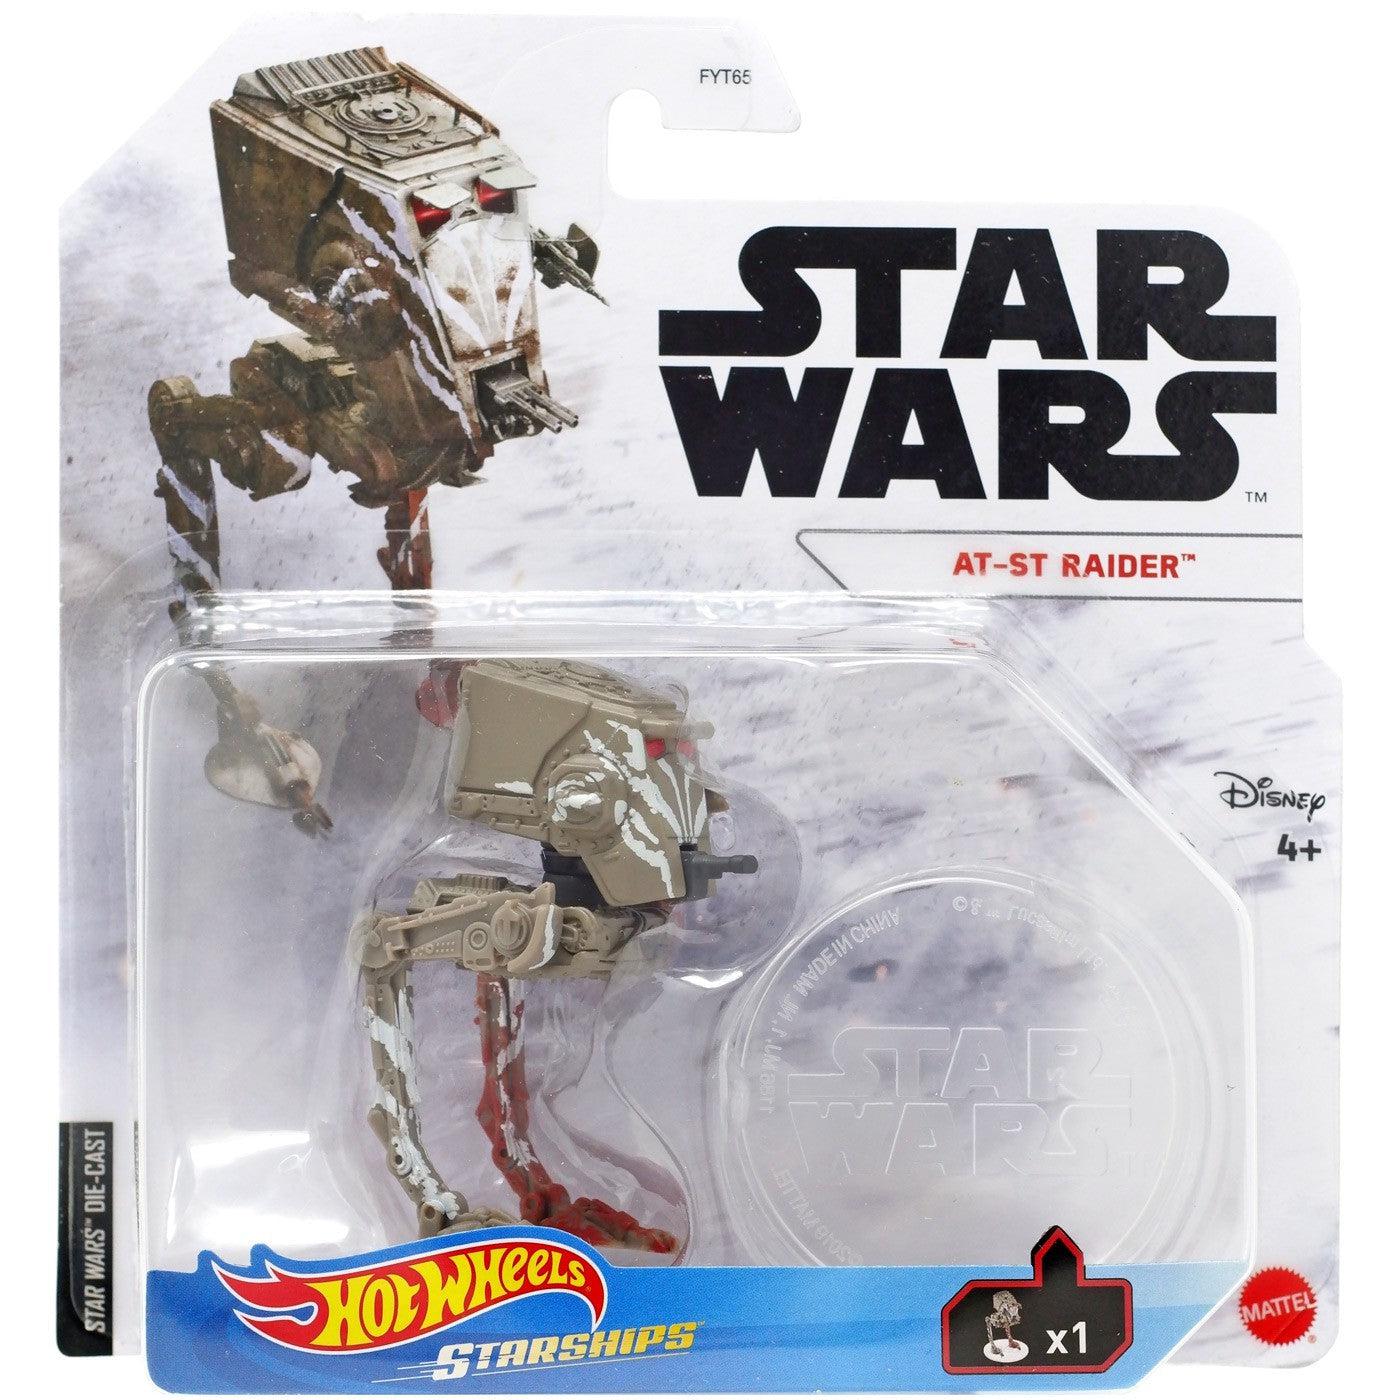 Mattel-Hot Wheels Star Wars Starships Vehicles-GWV24-AT-ST Raider-Legacy Toys